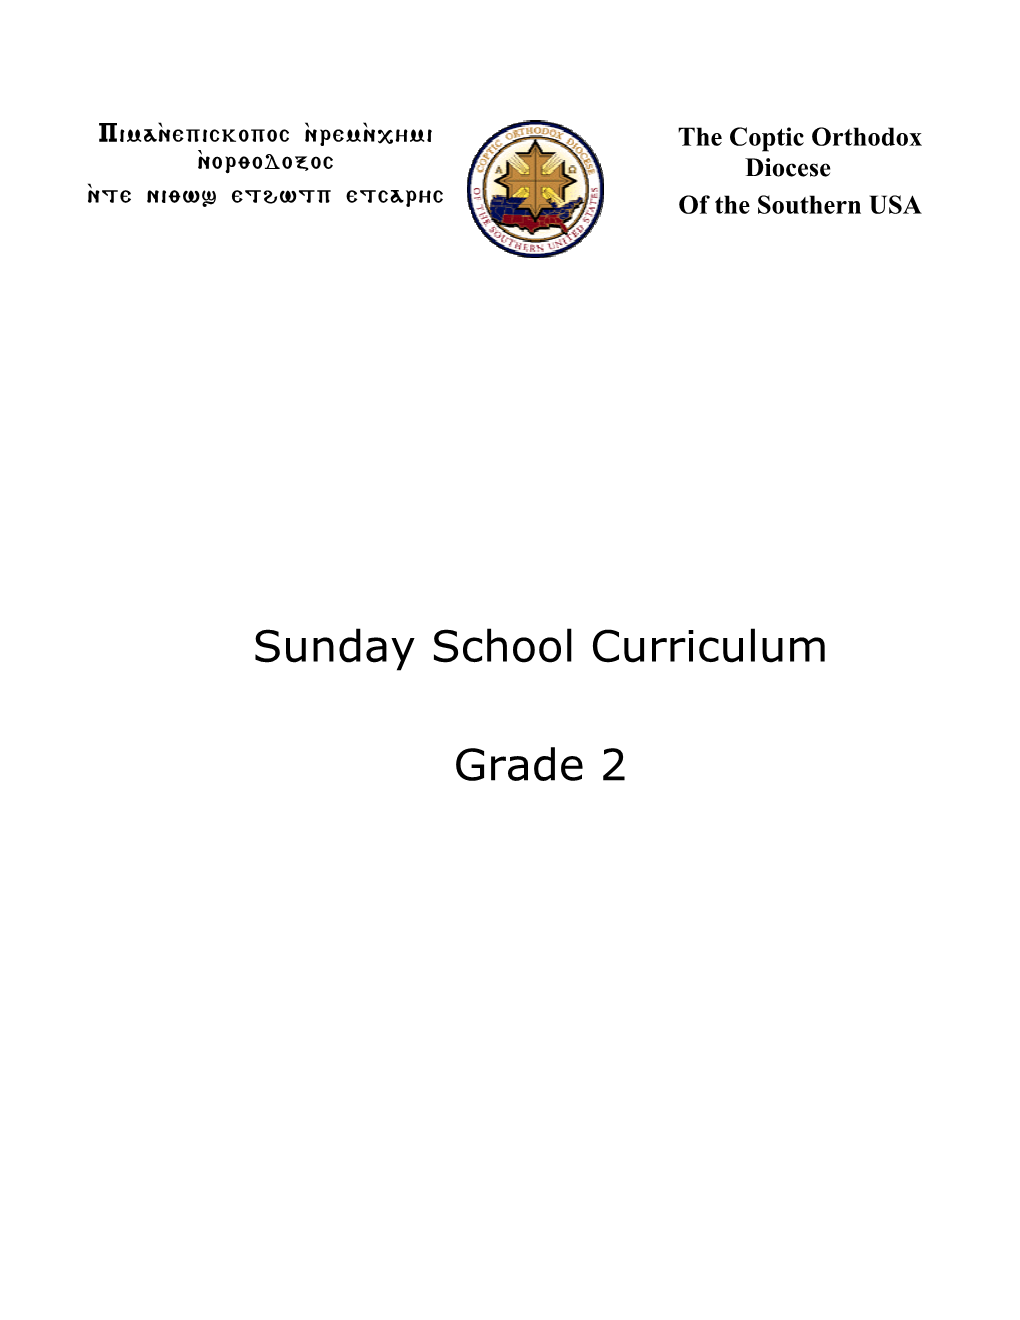 Sunday School Curriculum Grade 2